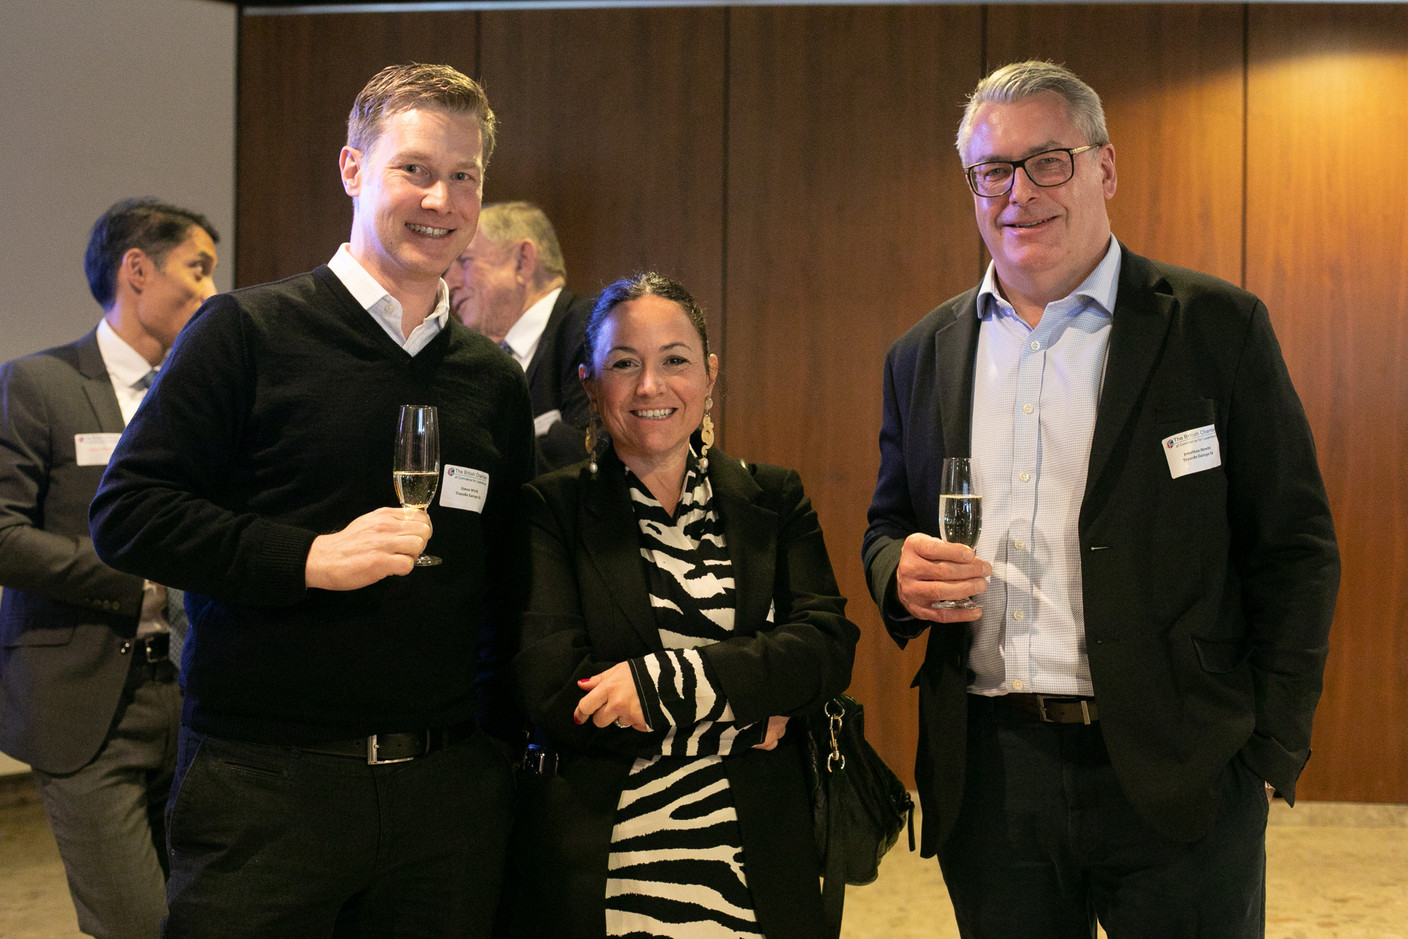 Simon Wirth, Mariavittoria Milanese and Jonathan Hewitt, all with Transre Europe. Photo: Matic Zorman / Maison Moderne